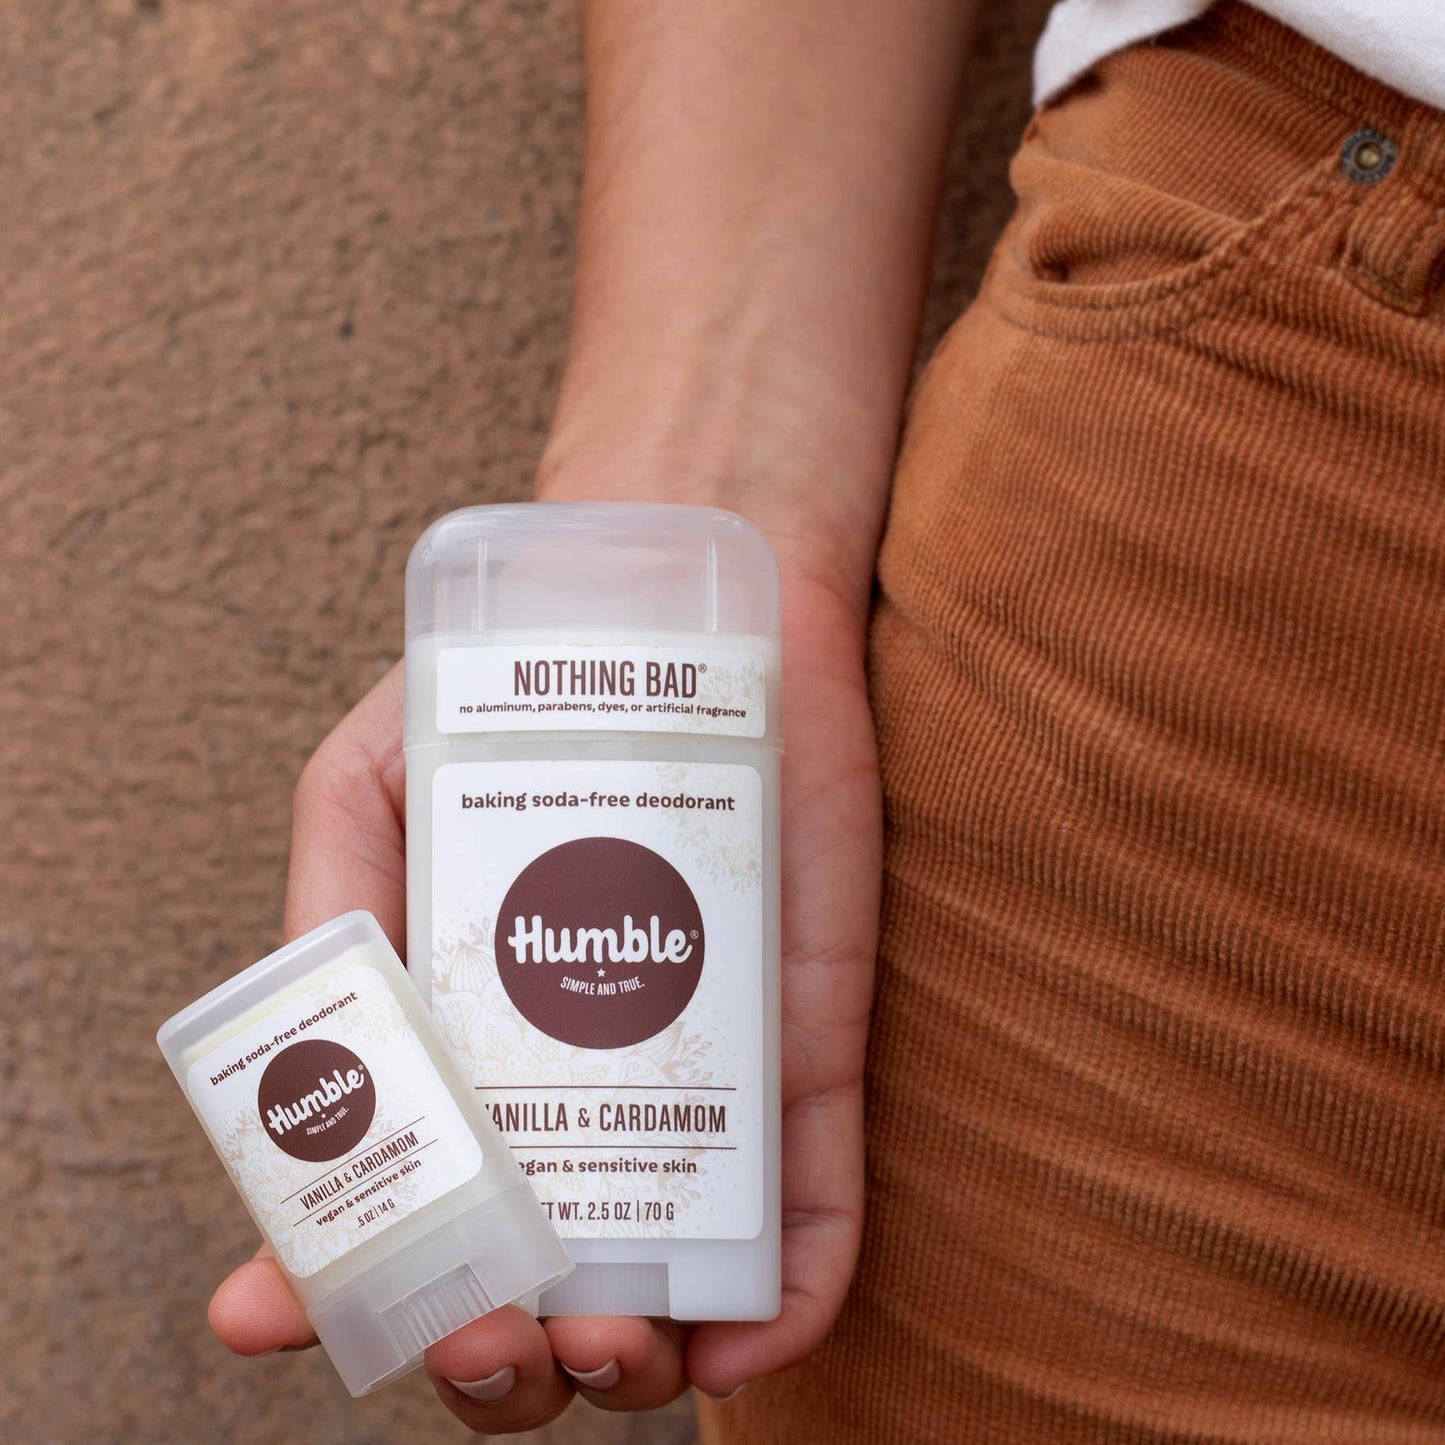 Humble Brands, Inc. - Vegan & Sensitive Skin Vanilla & Cardamom (Holiday Scent)